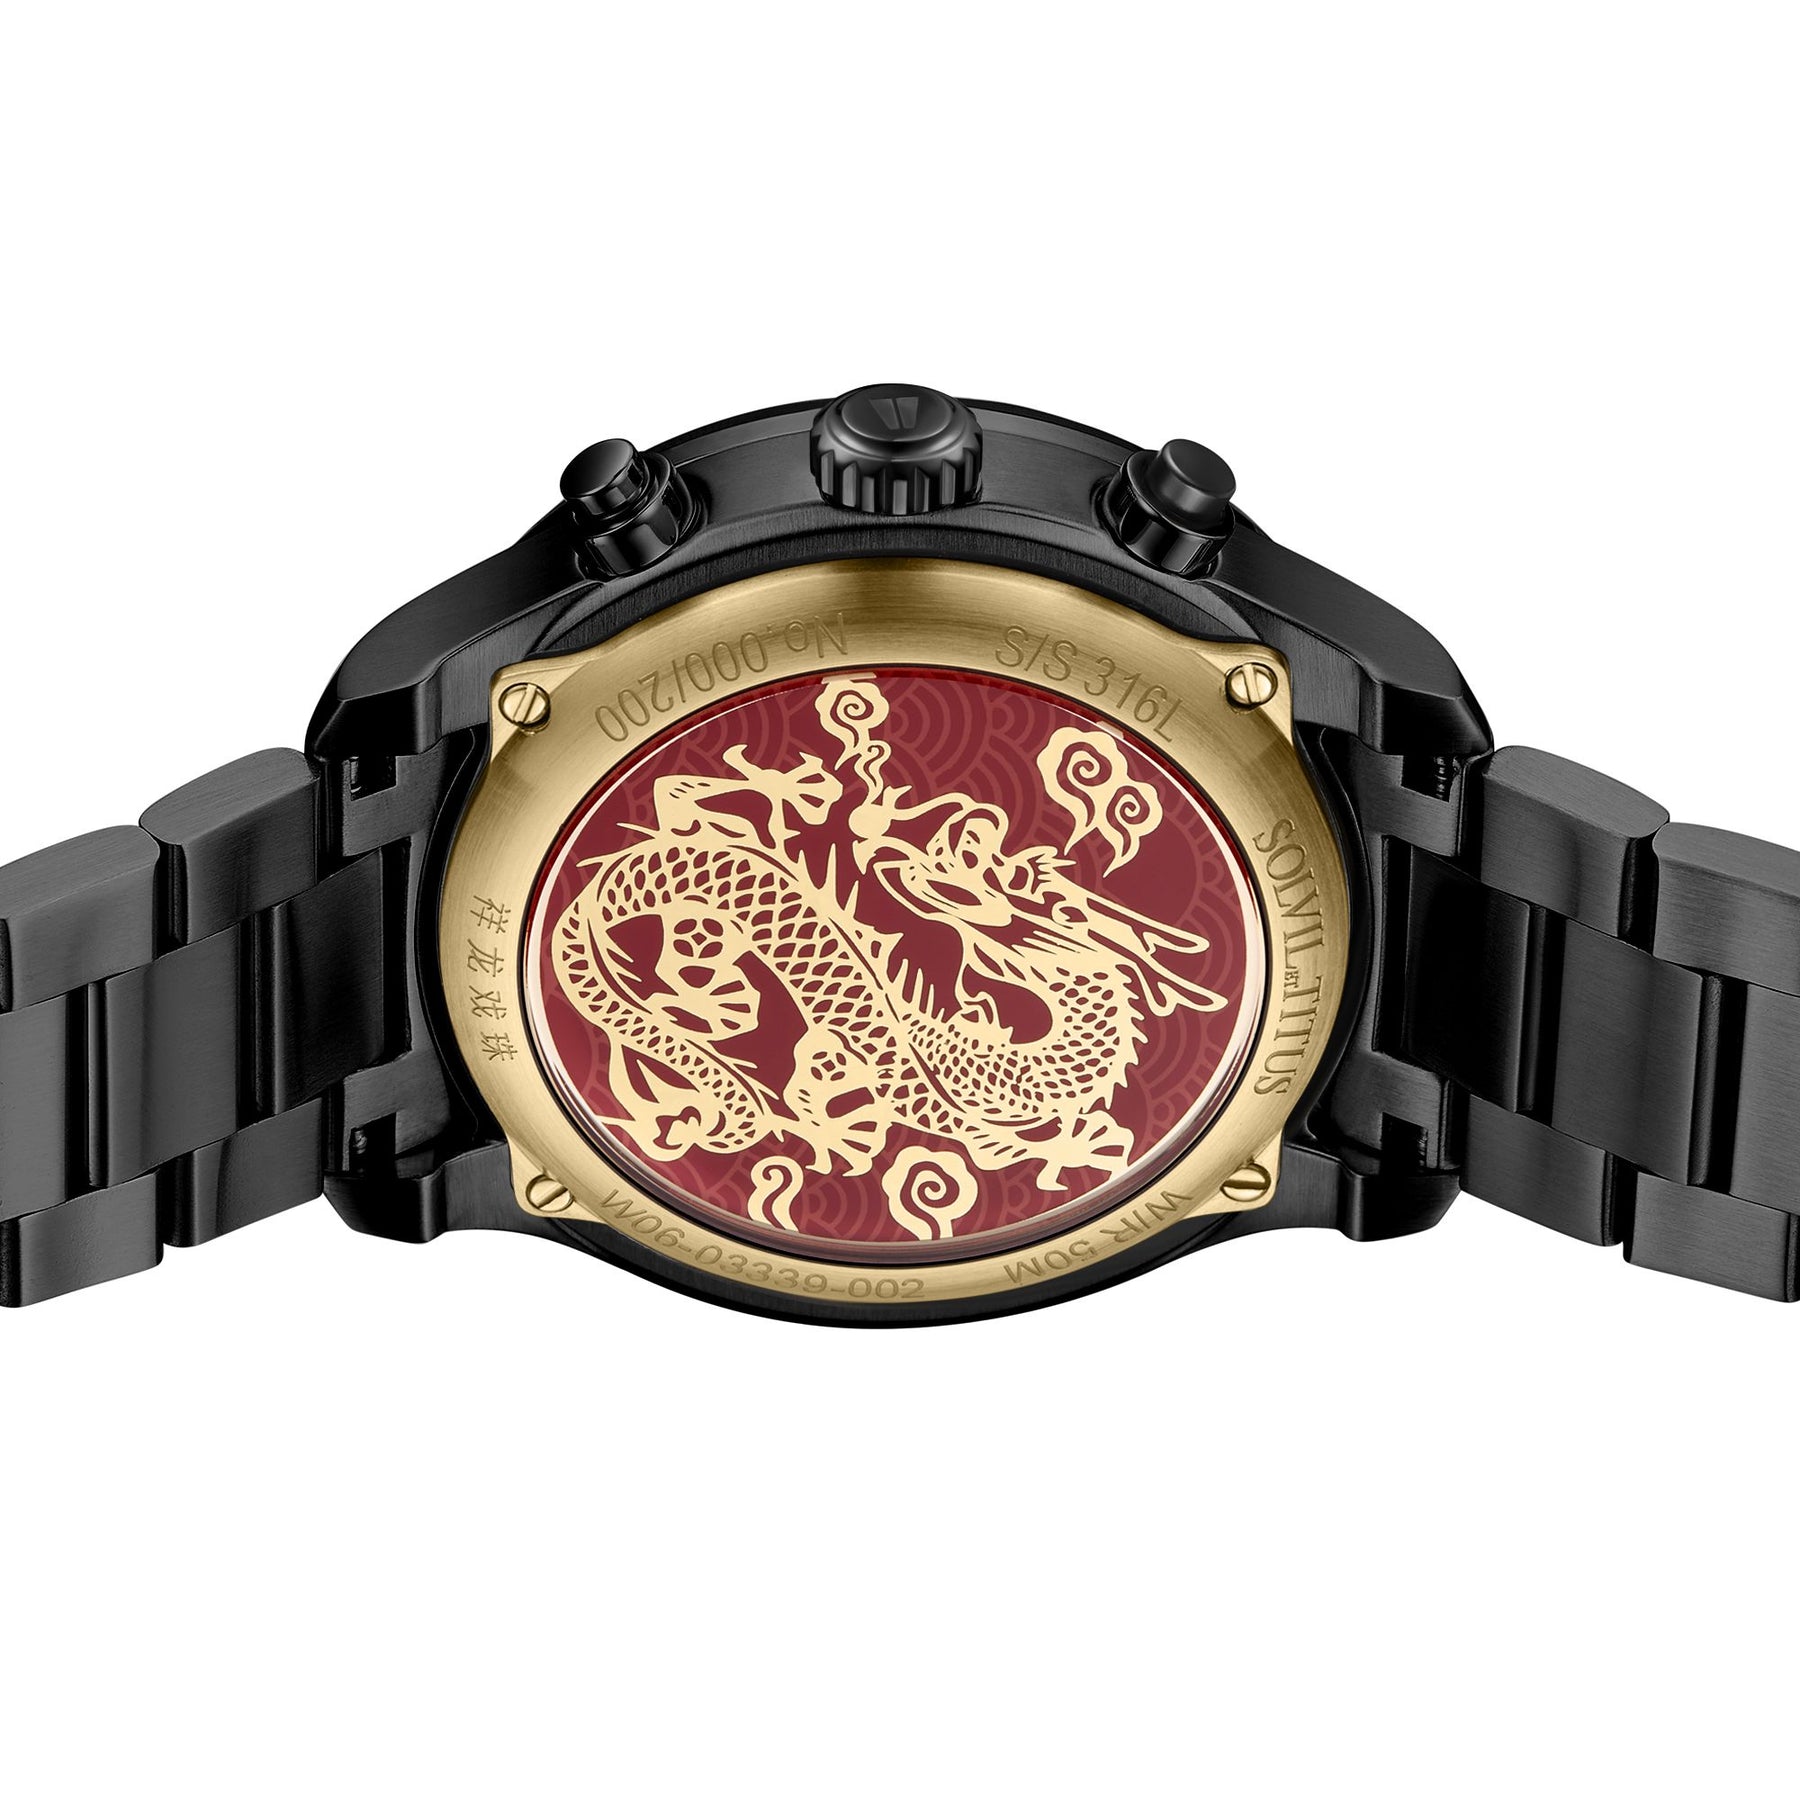 [MEN] Saber "Year of Dragon" Chronograph Quartz Stainless Steel Watch Box Set [W06-03339-002]